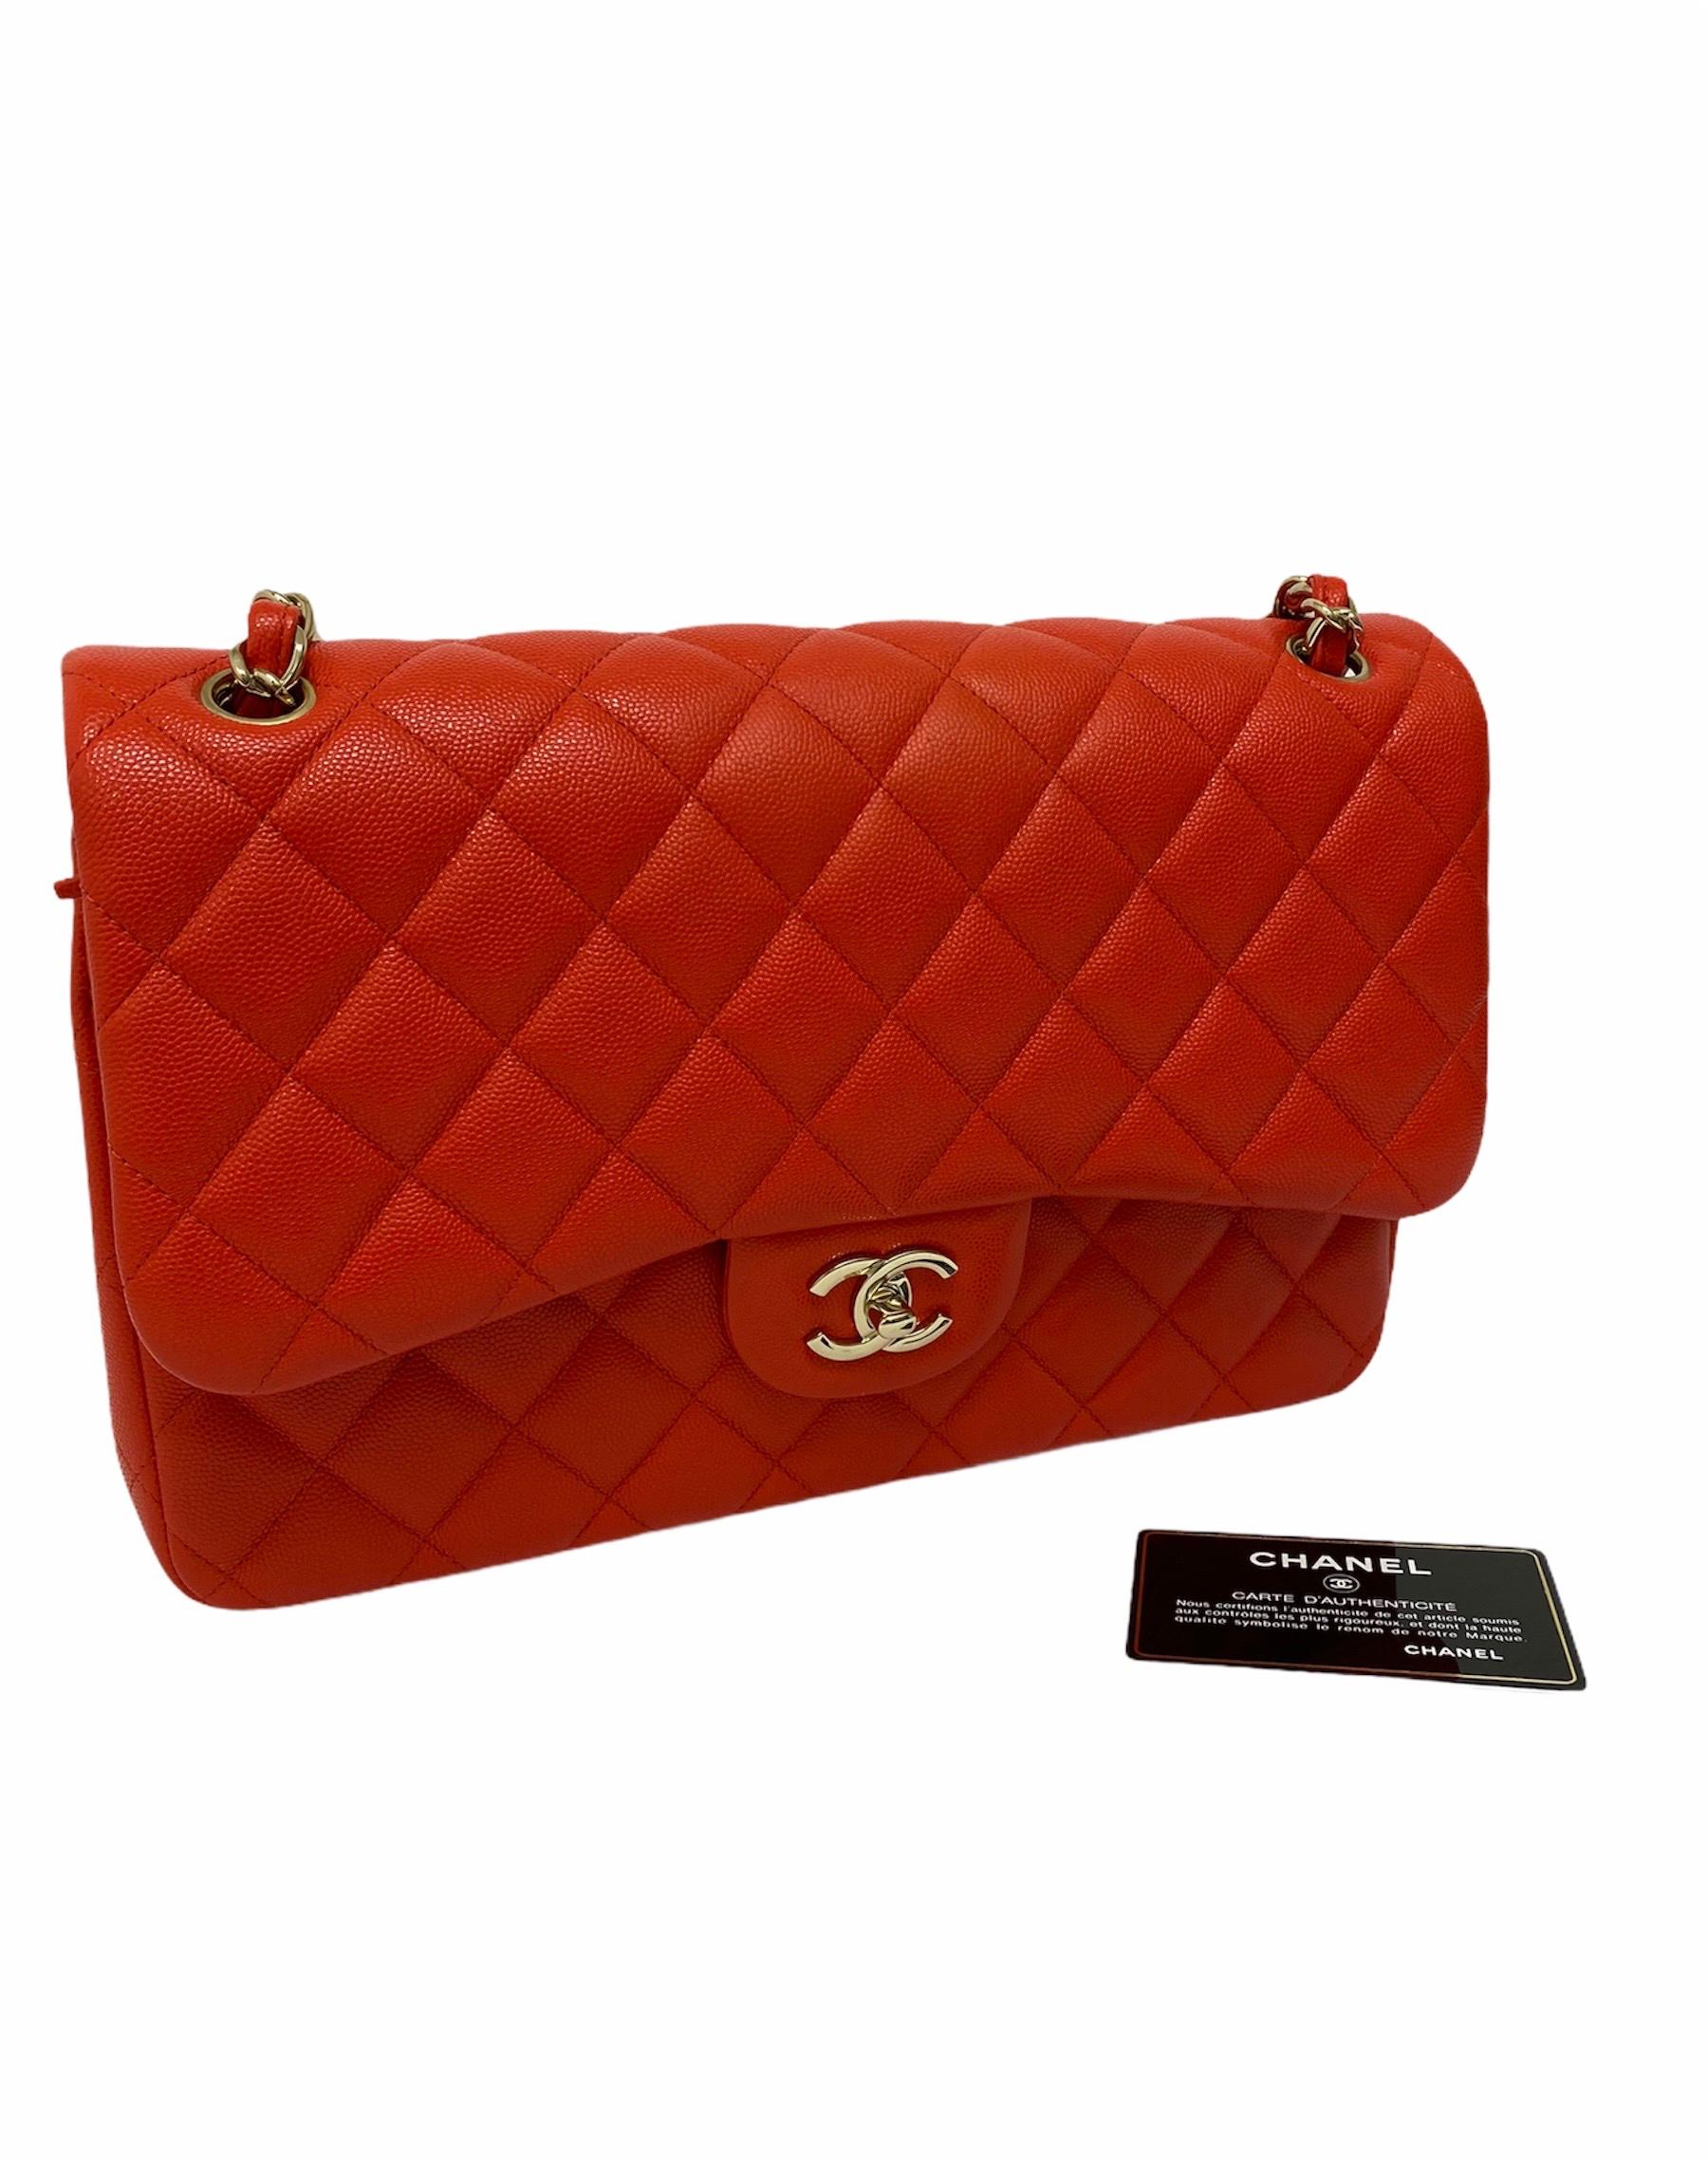 2019 Chanel Red Leather Maxi Jumbo Bag 5